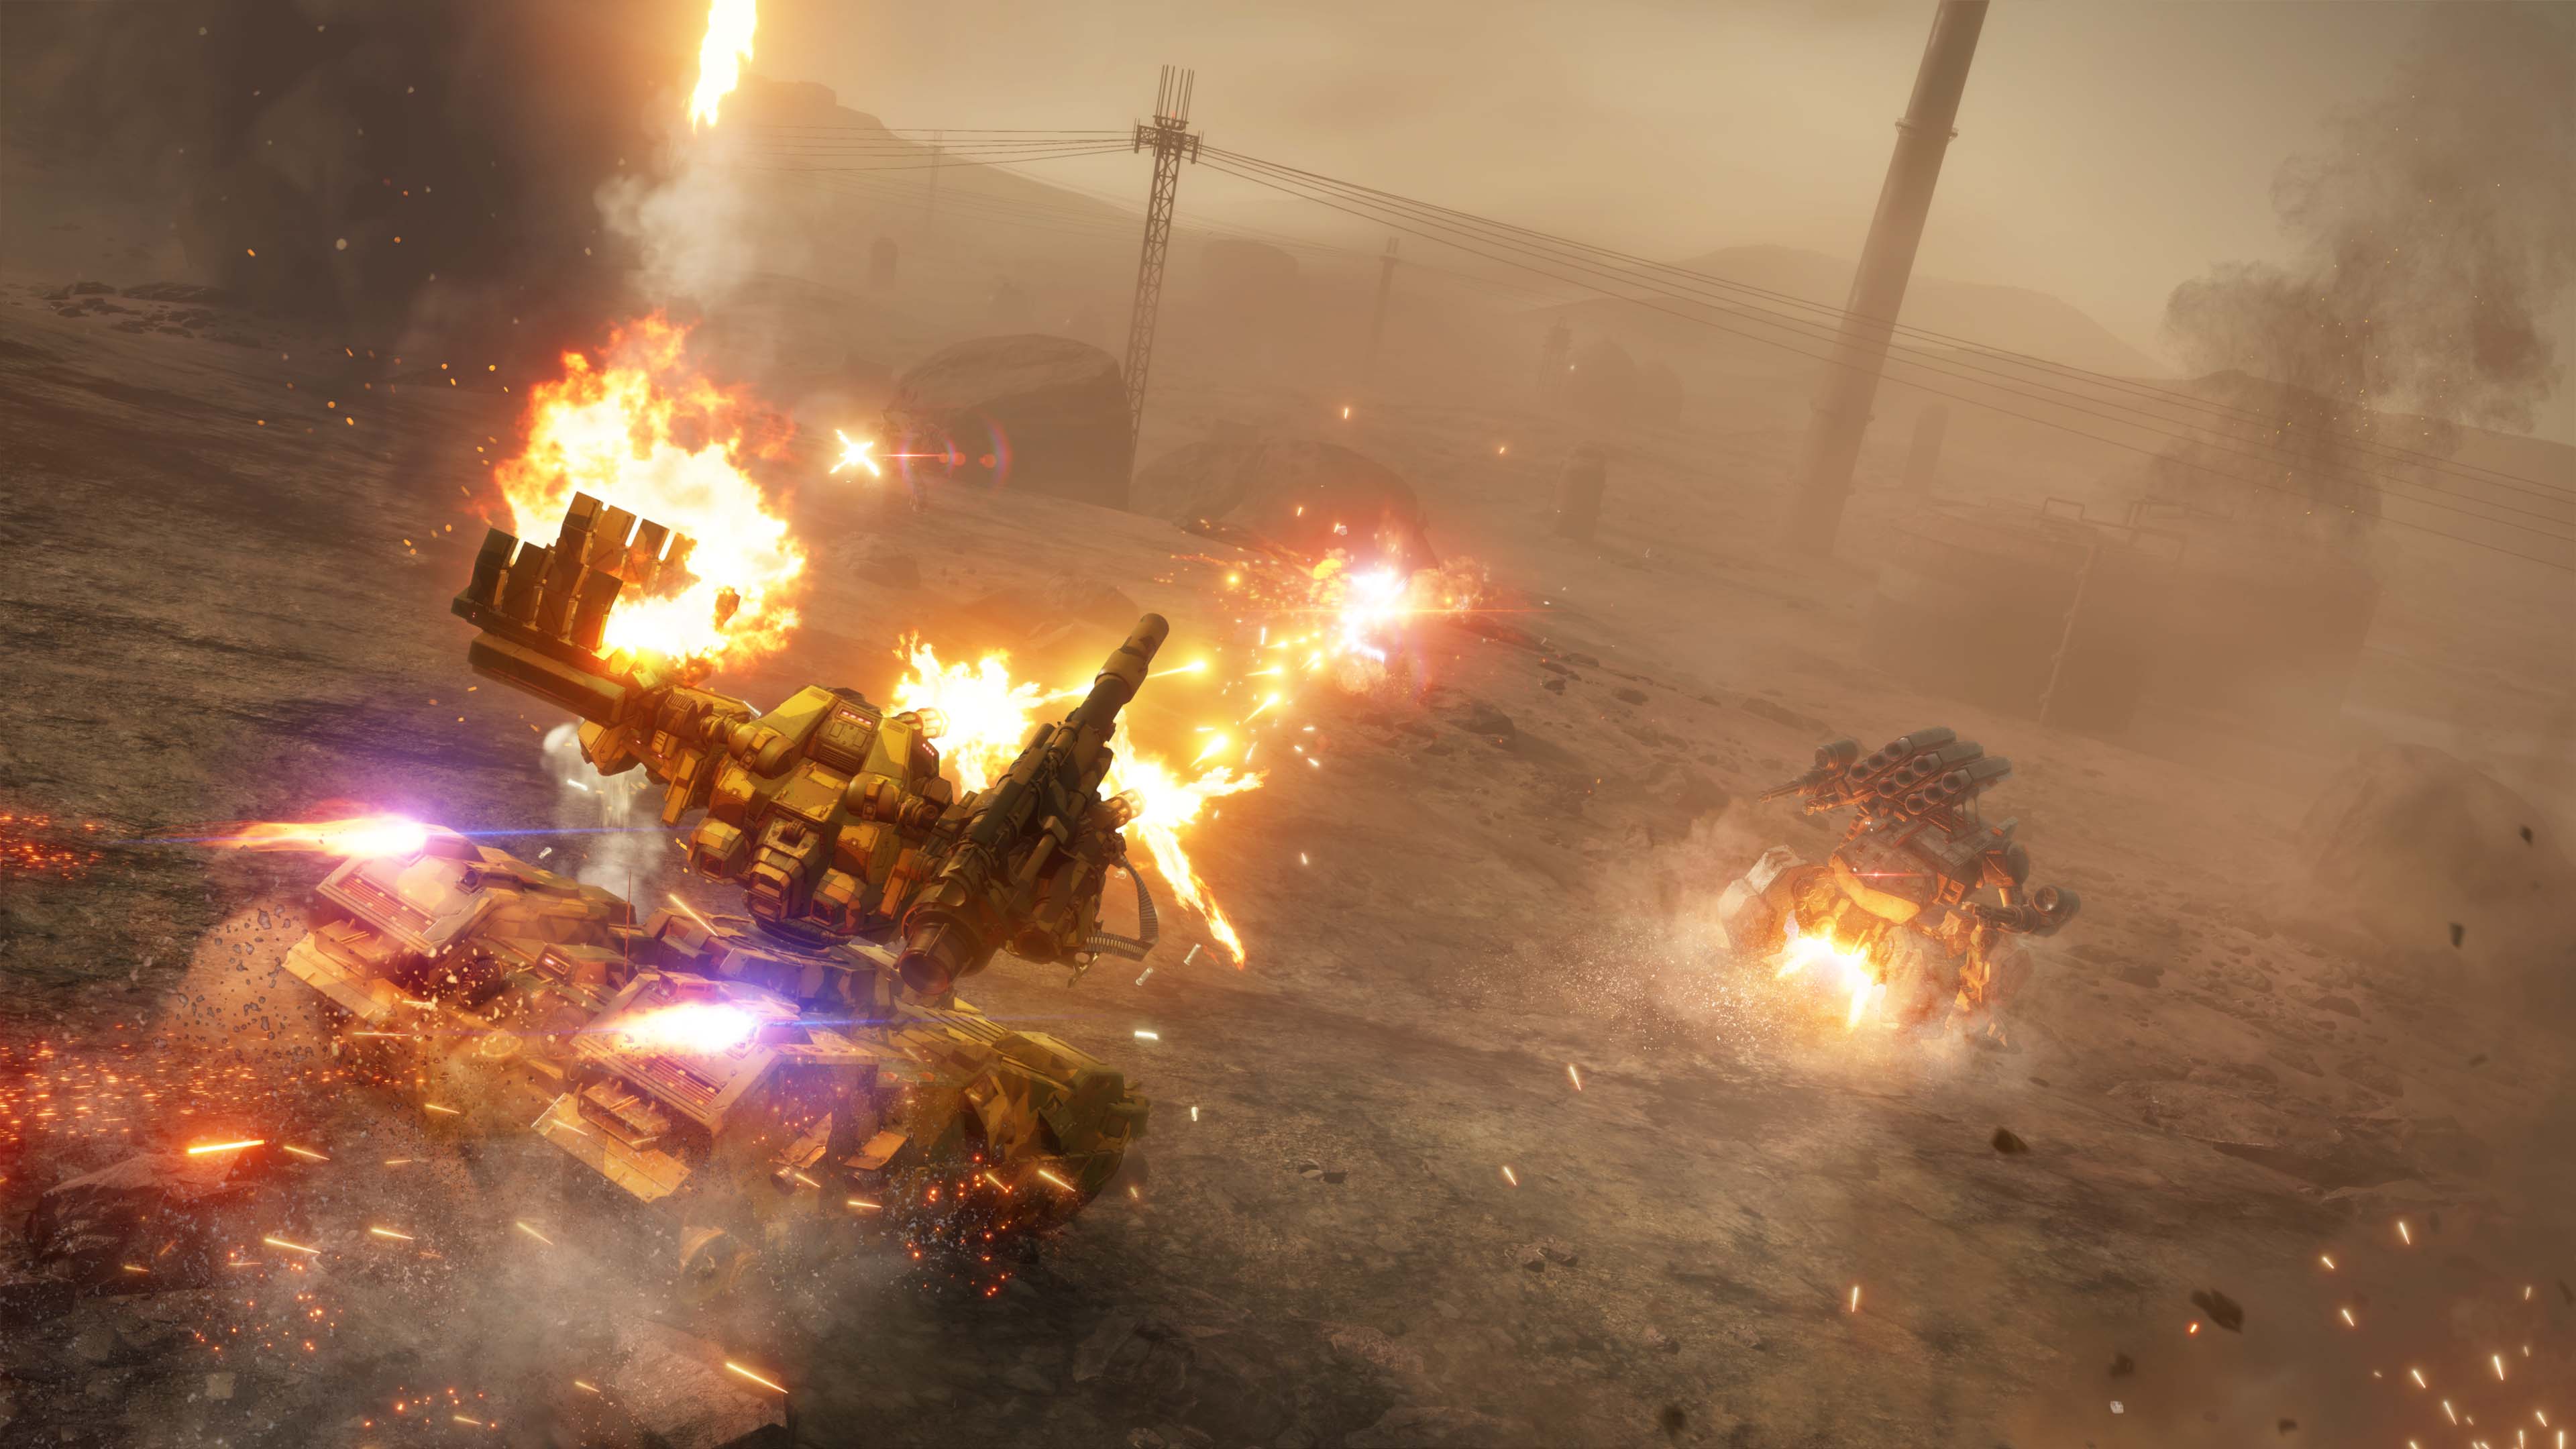 Armored Core Vi Fires Of Rubicon - Launch Edition, PS5 : :  Videojuegos